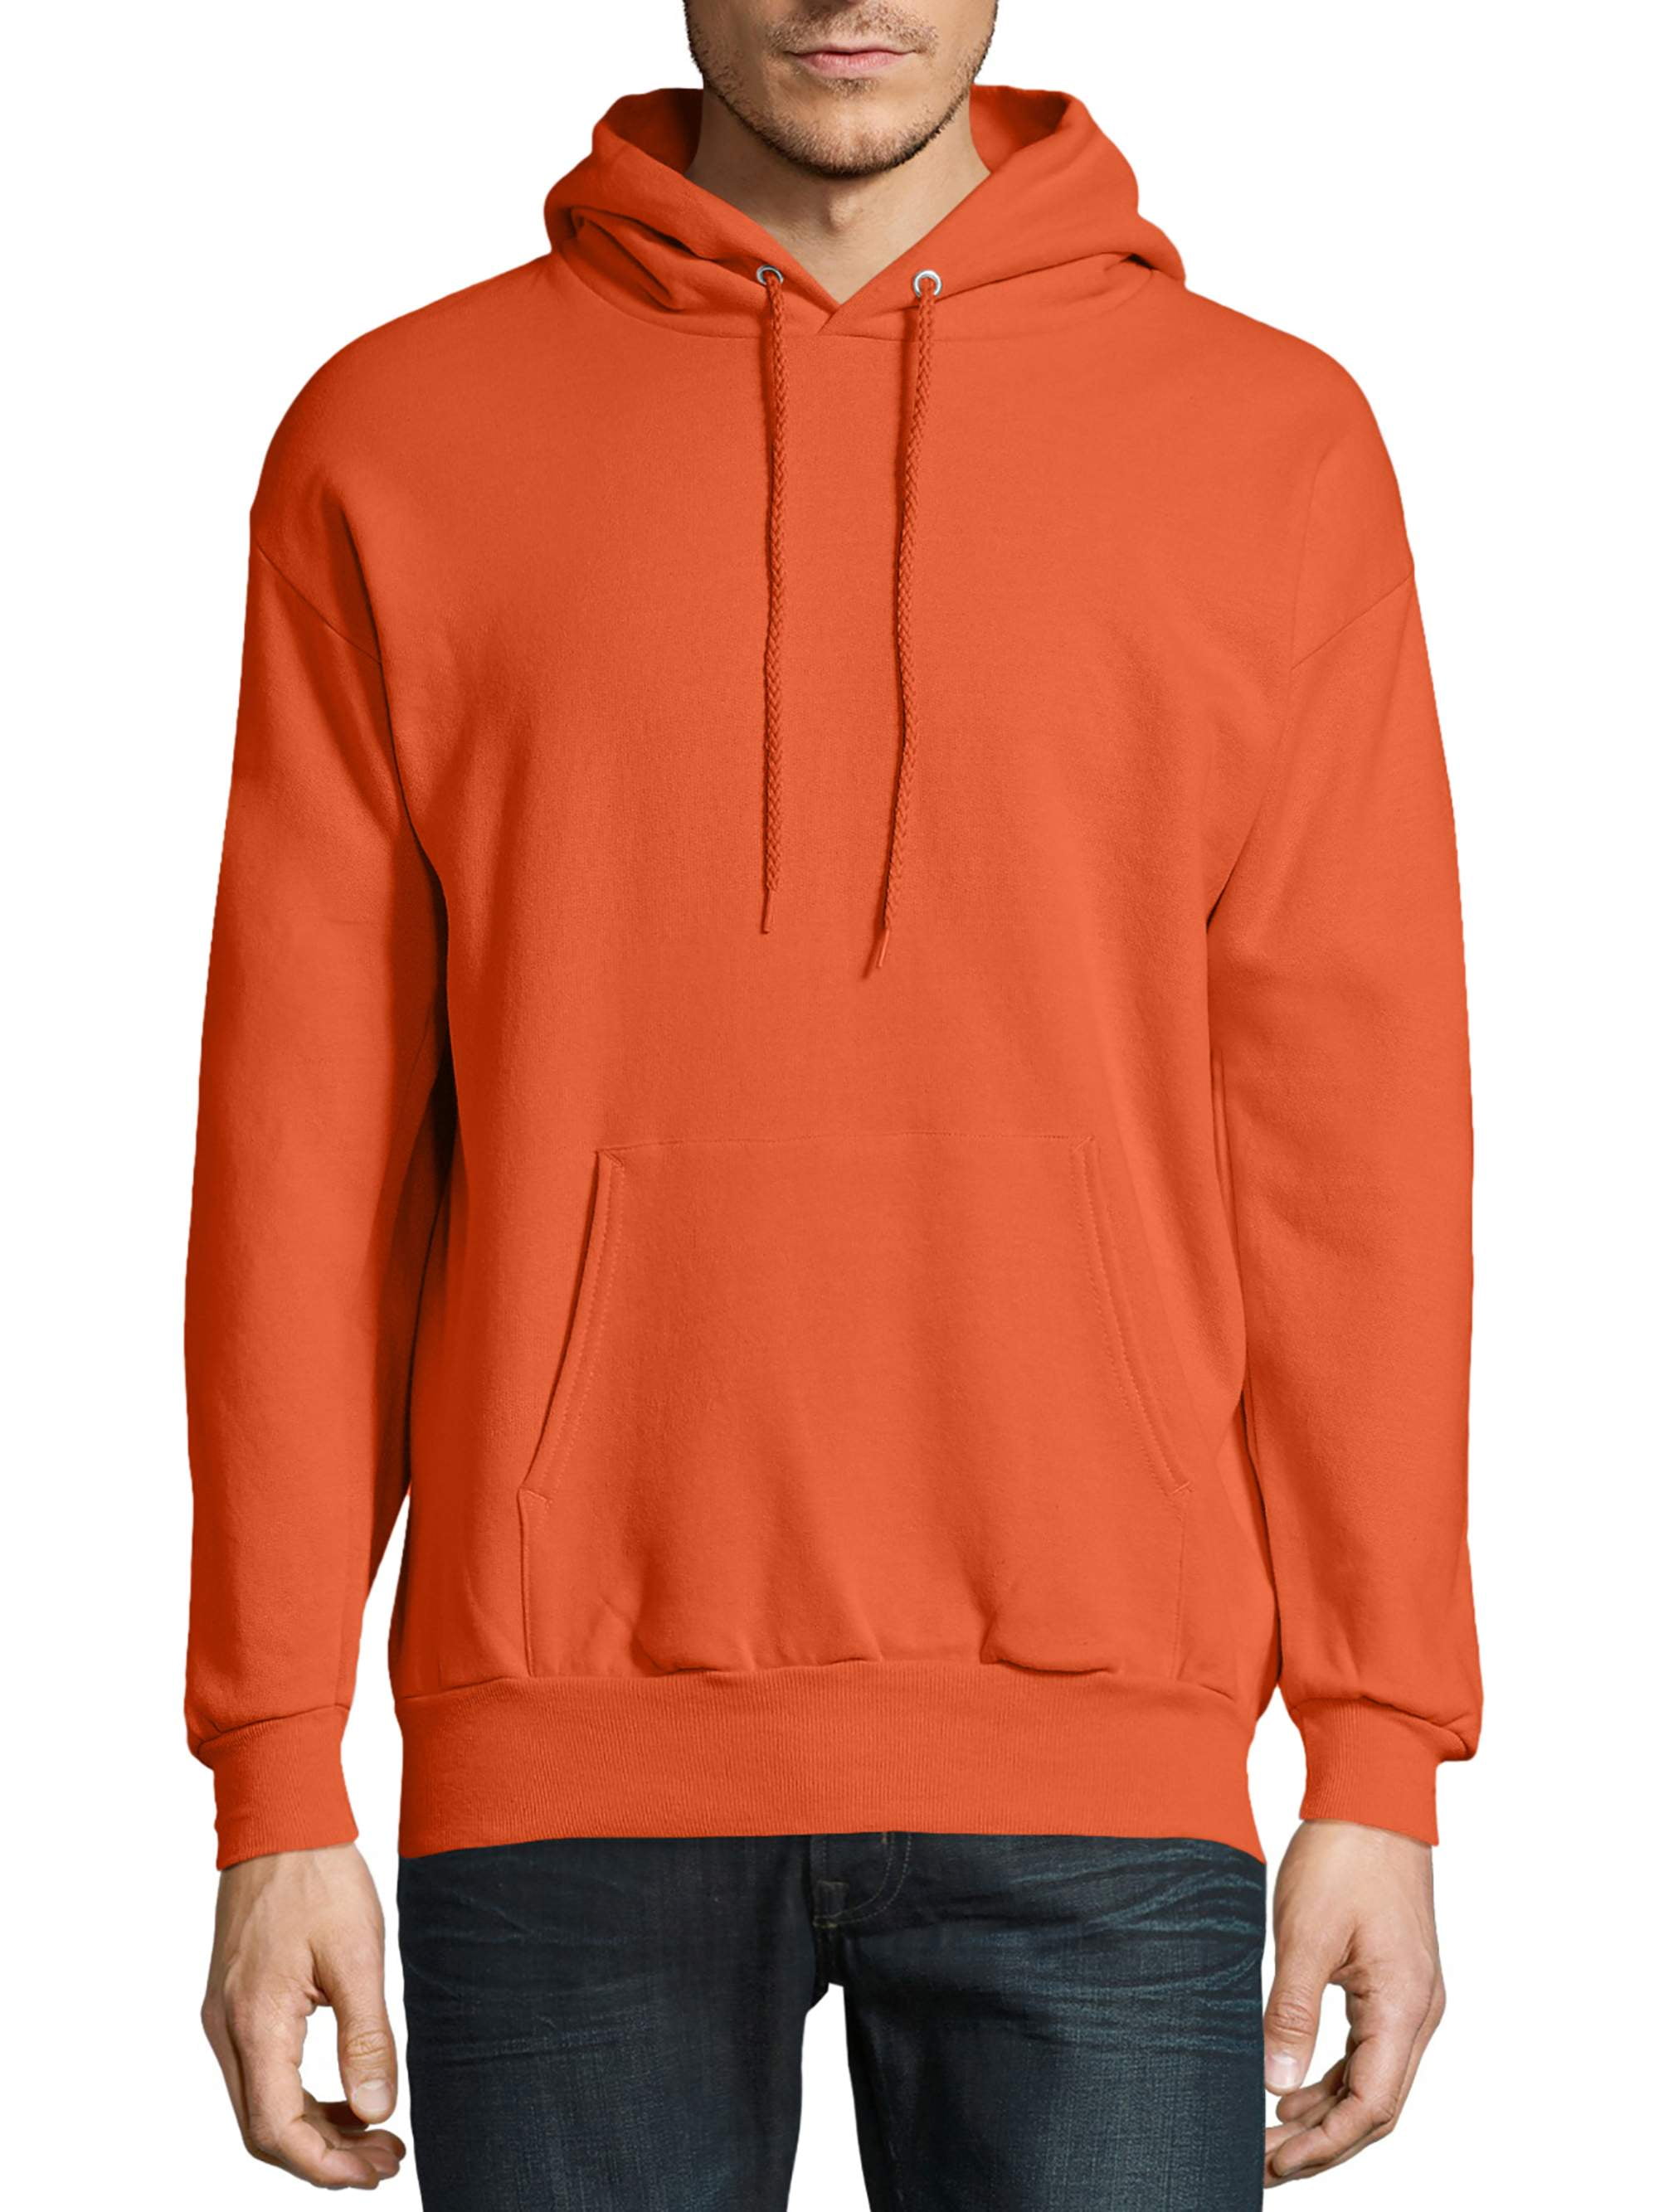 1 Orange Hanes P170 Mens EcoSmart Hooded Sweatshirt Medium 1 Black